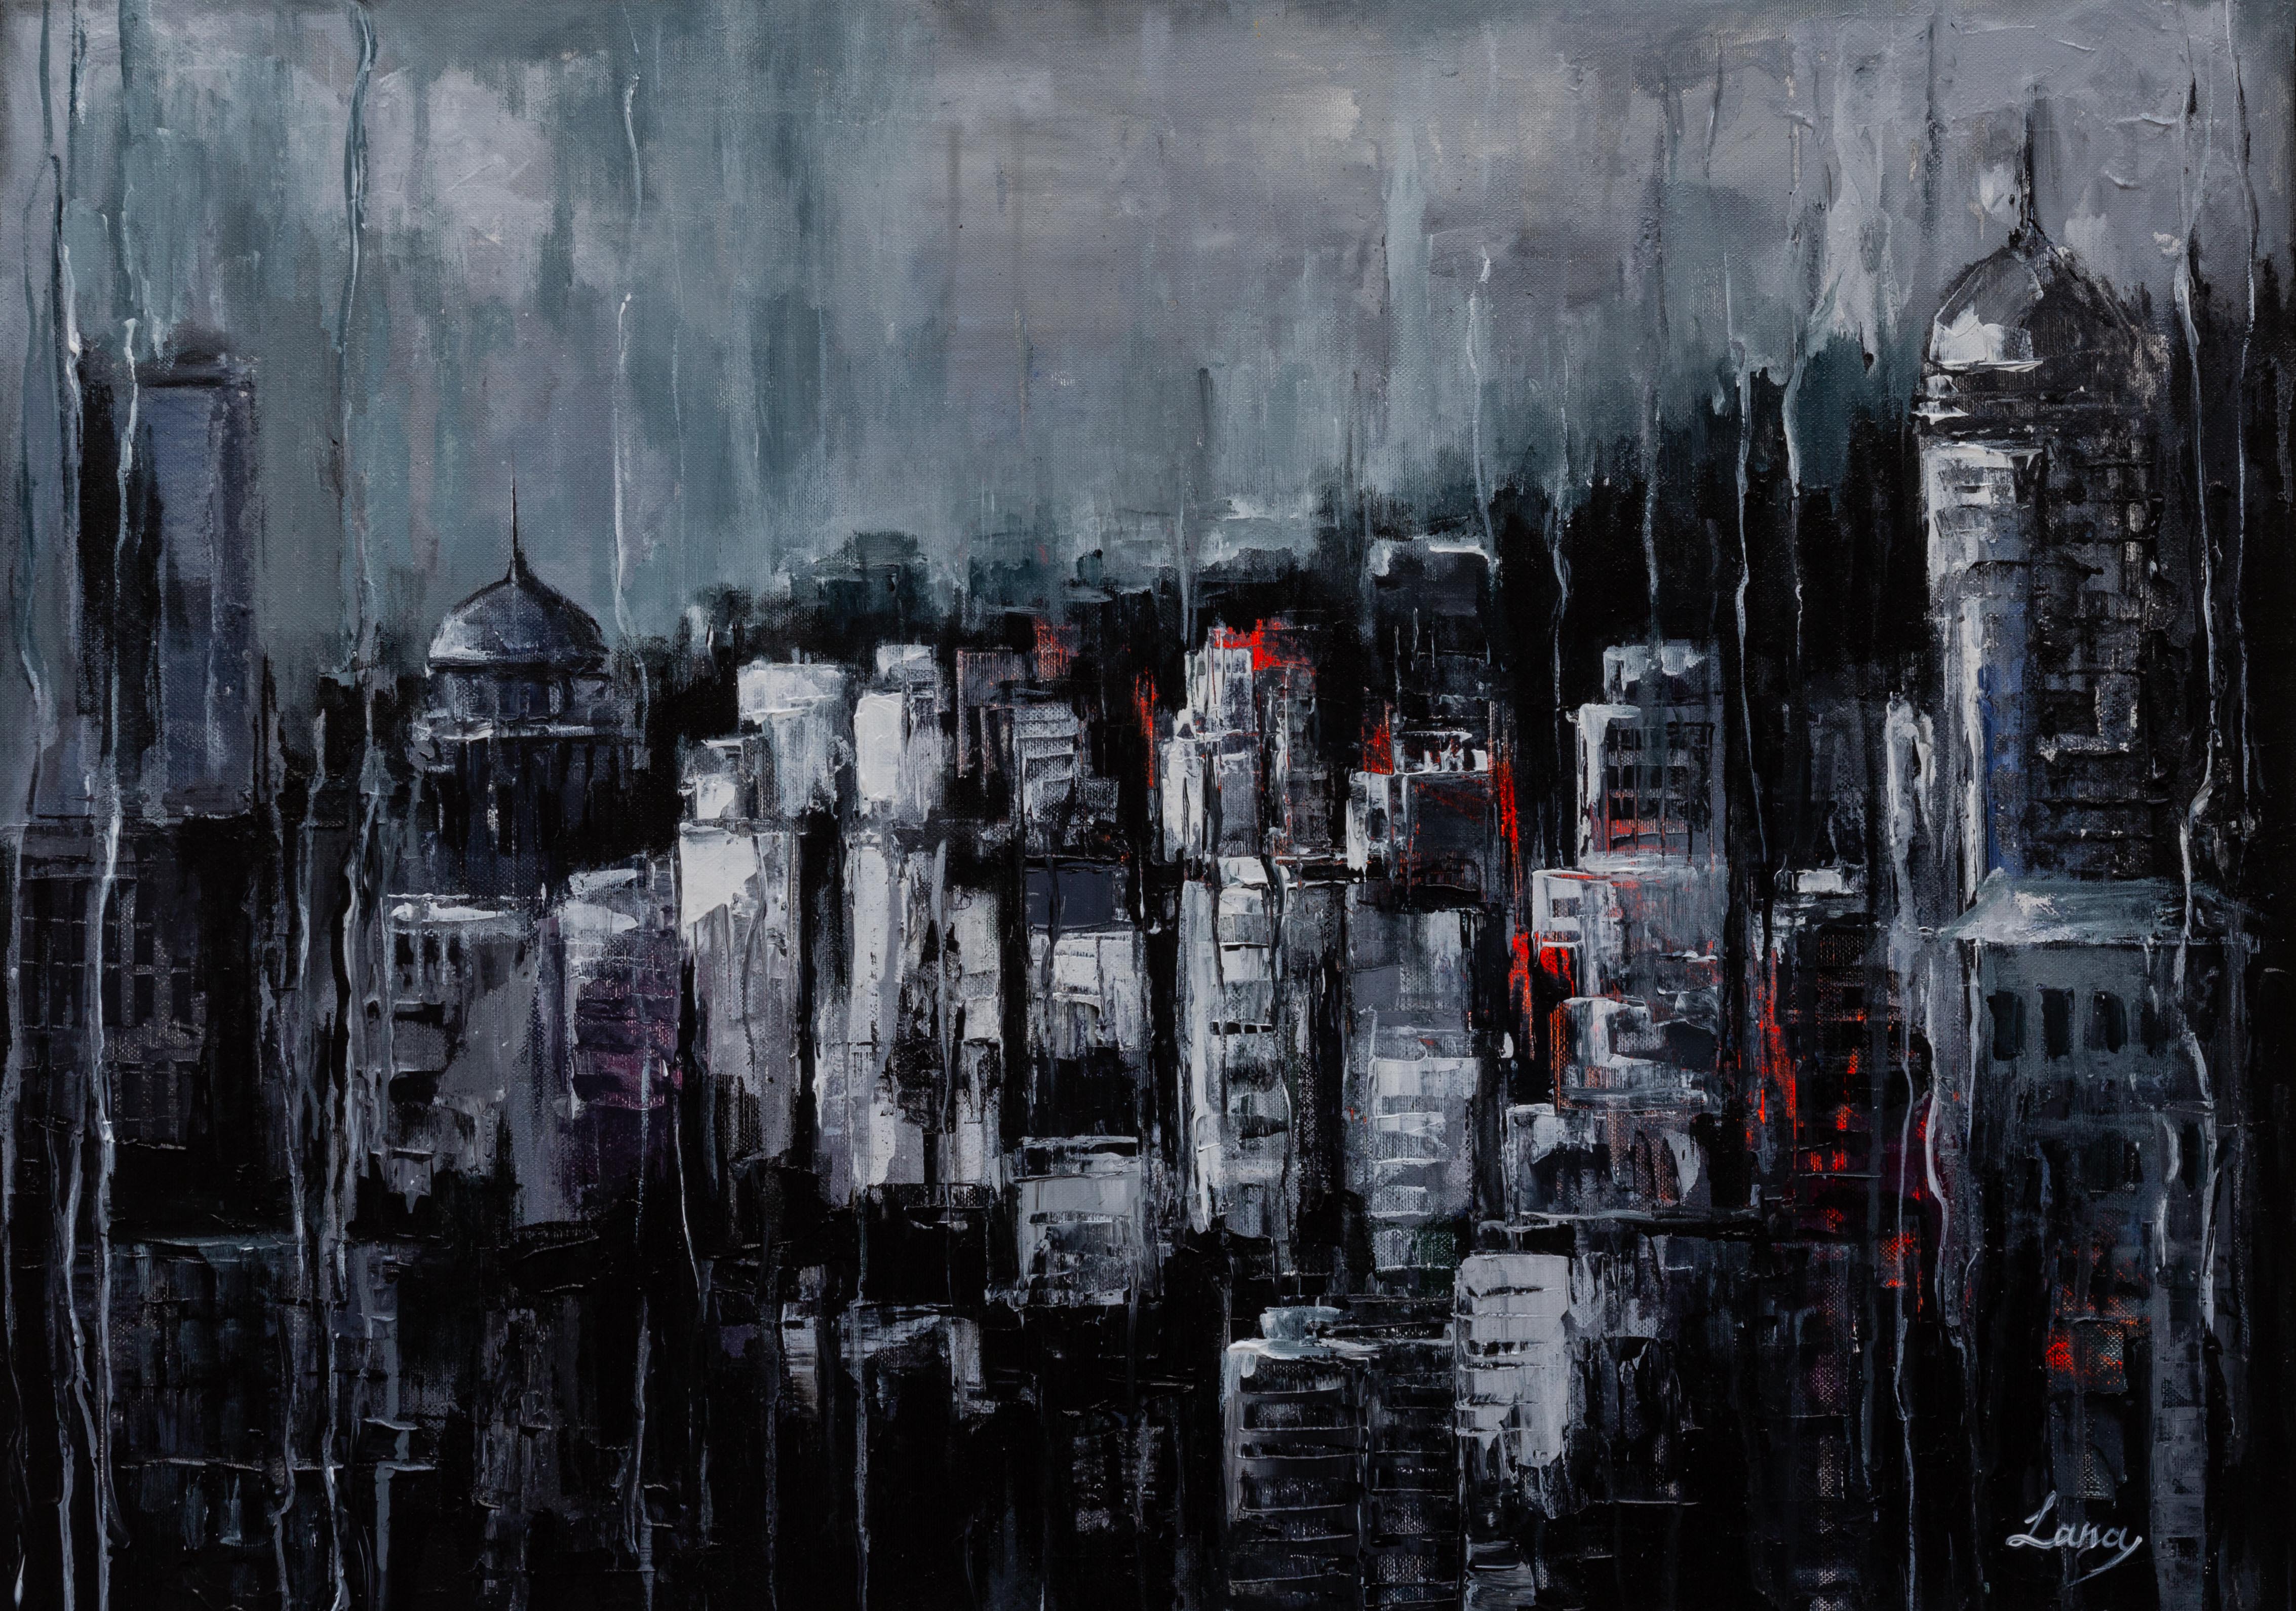 Lana Frey, "November rain", acrylic on canvas, 70 x 50cm, c. 2020. Sometimes you just have this mood